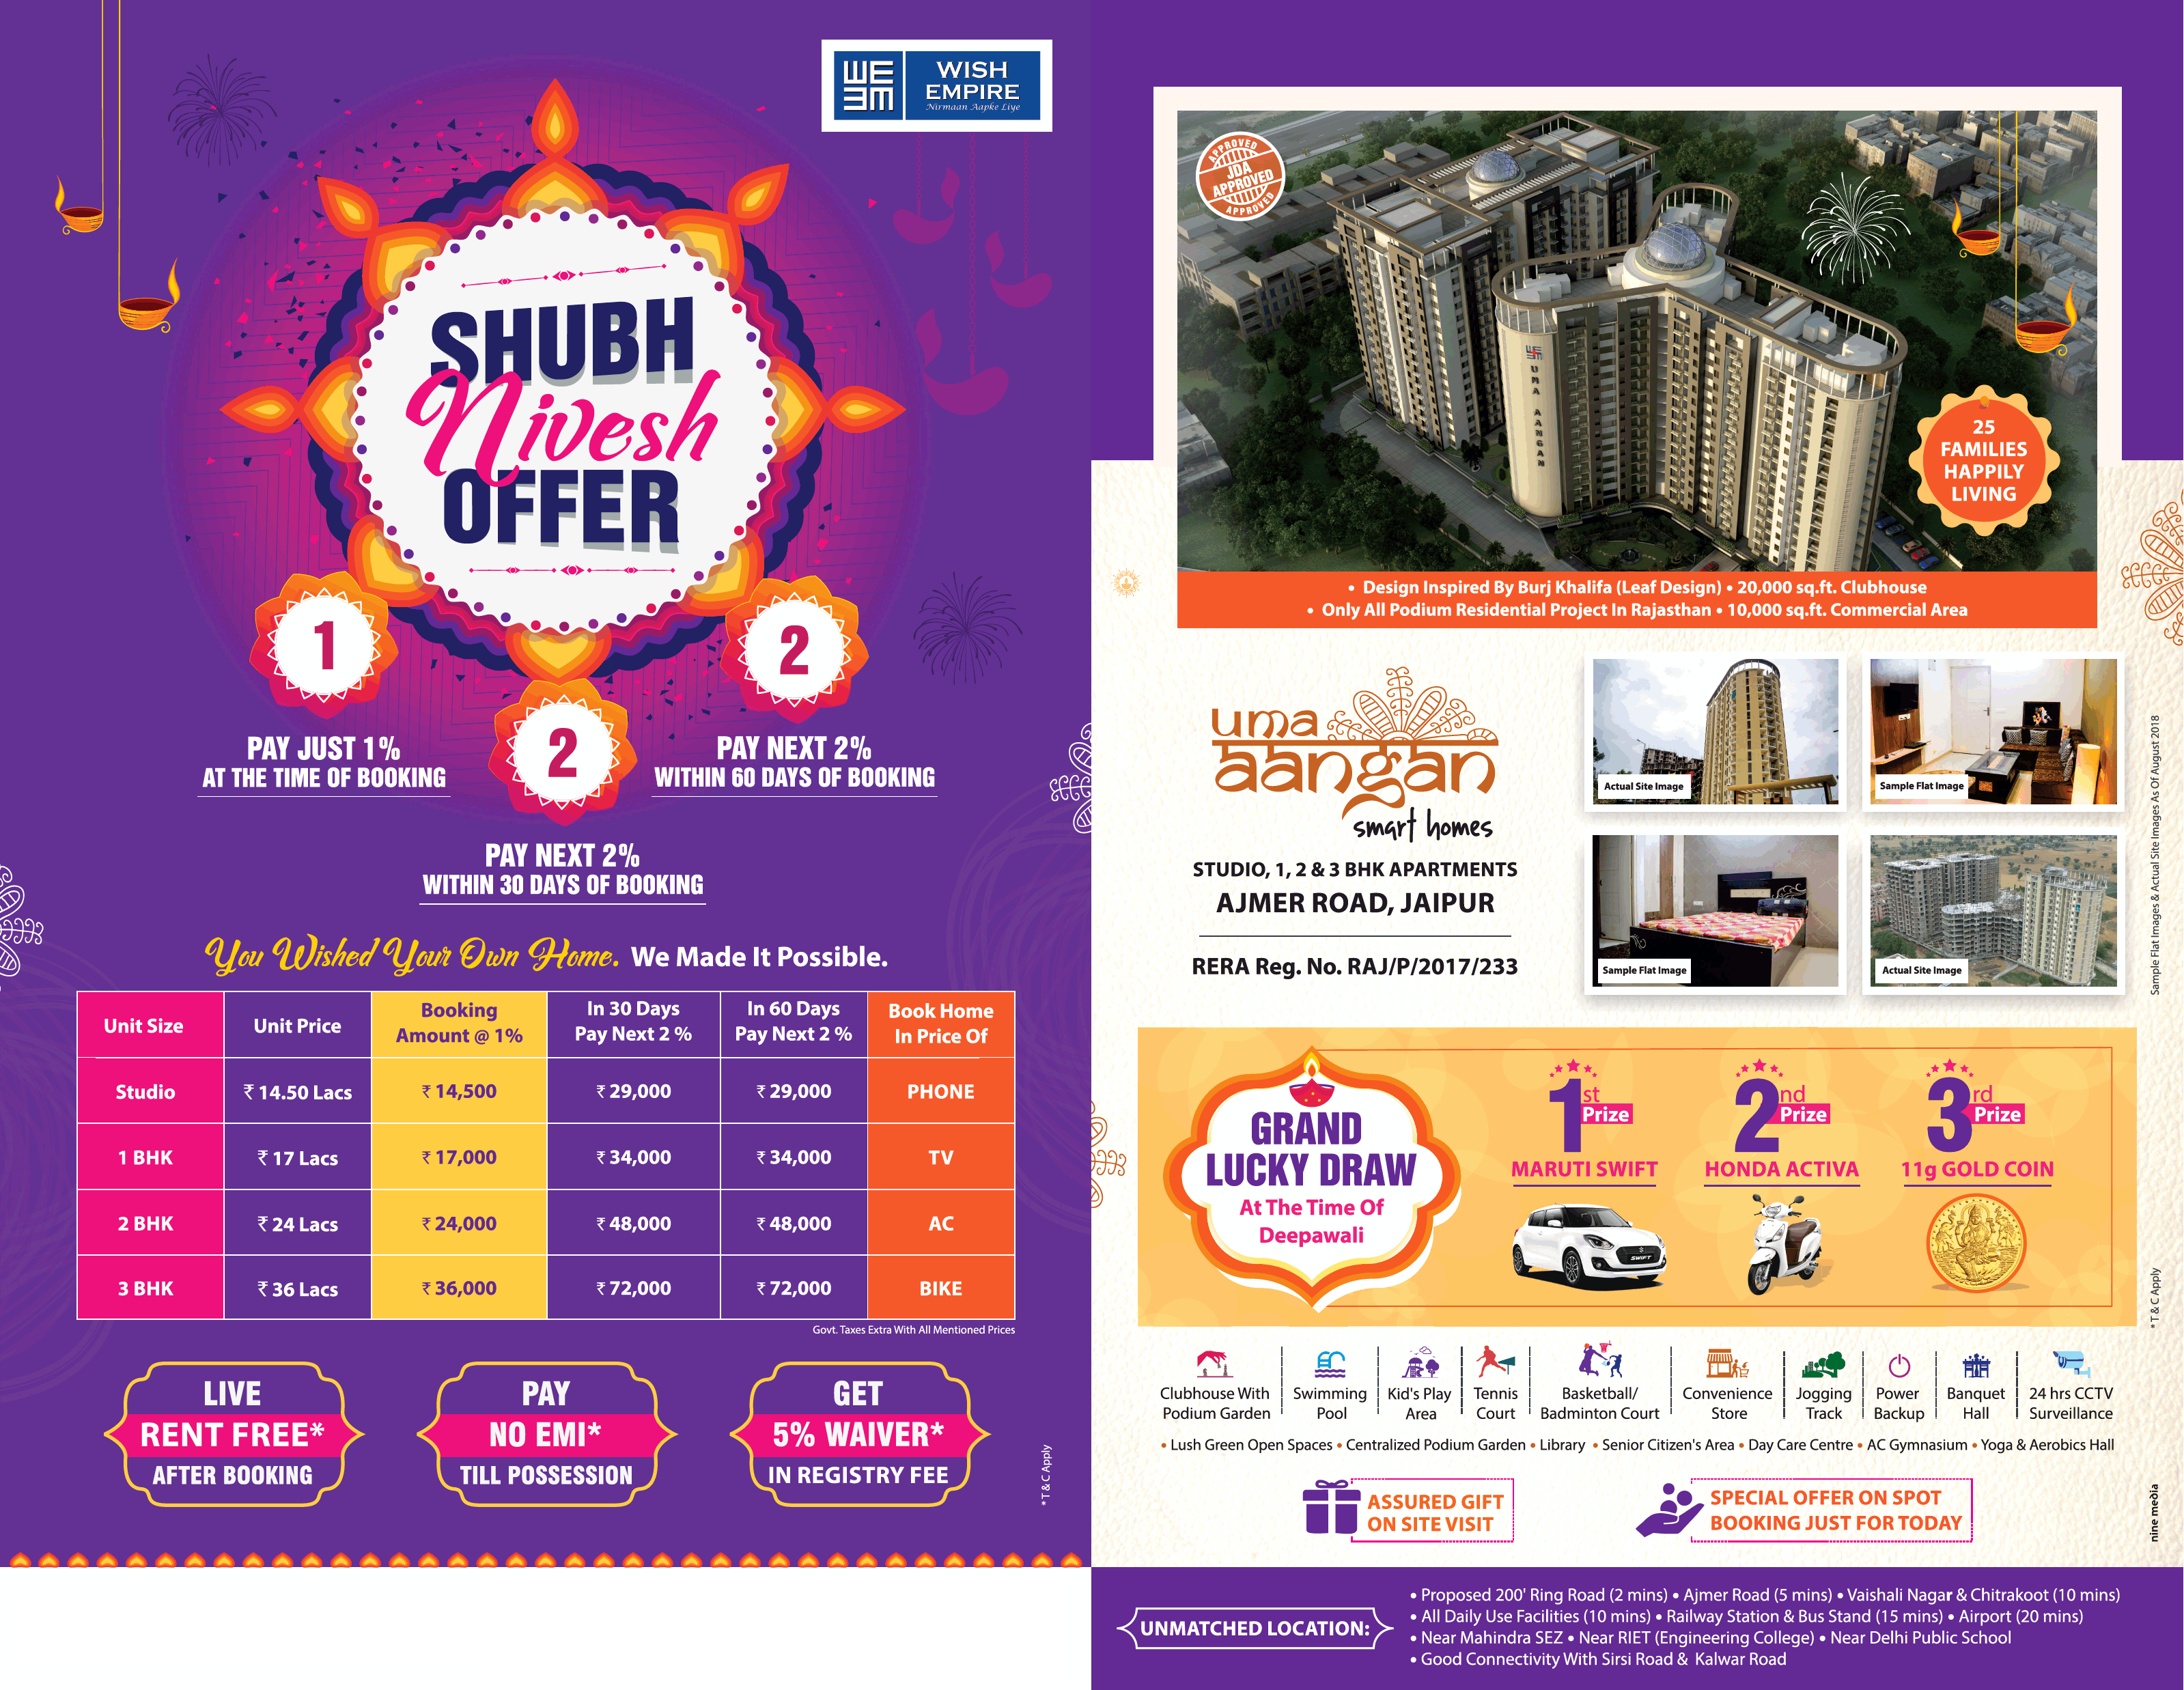 Wish Uma Aangan presents studio, 1, 2 & 3 bhk apartments in Jaipur Update